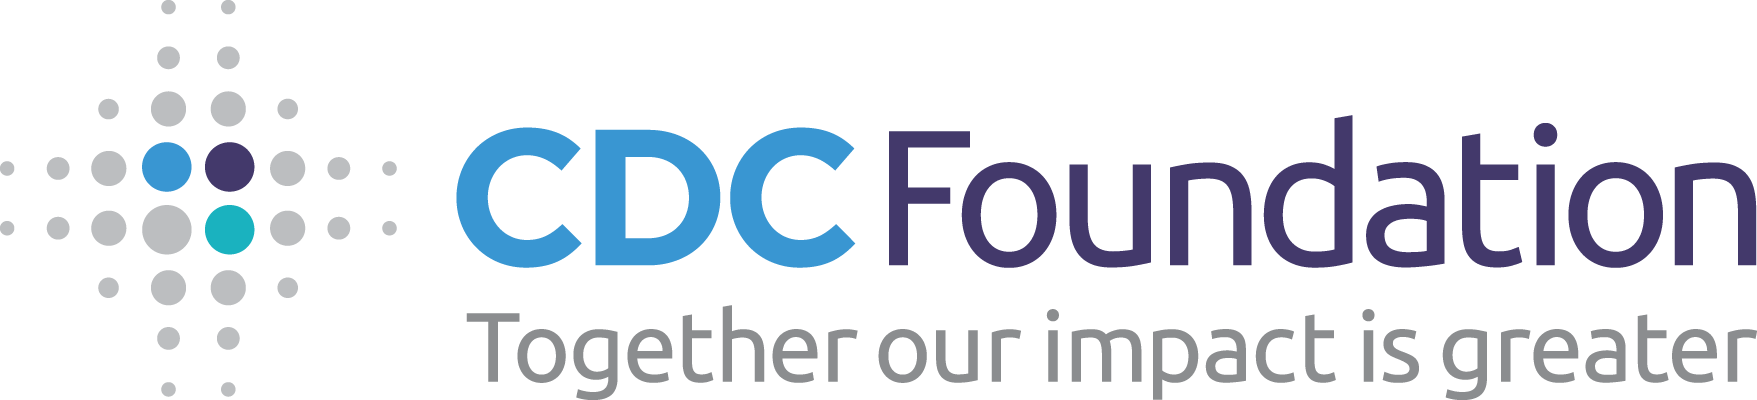 CDC Foundation company logo